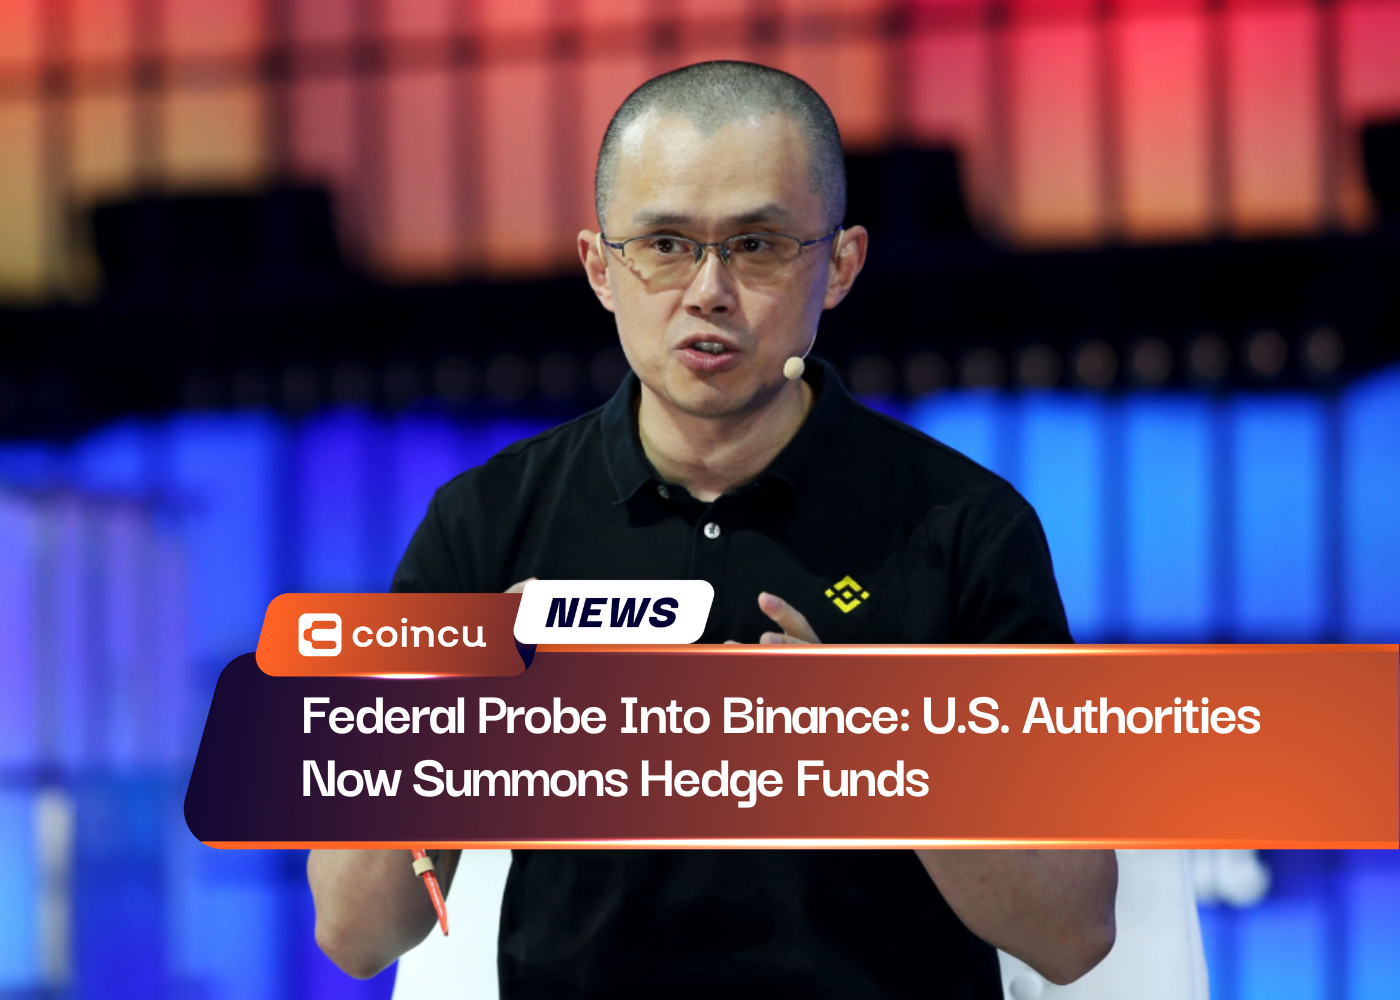 Federal Probe Into Binance: U.S. Authorities Now Summons Hedge Funds